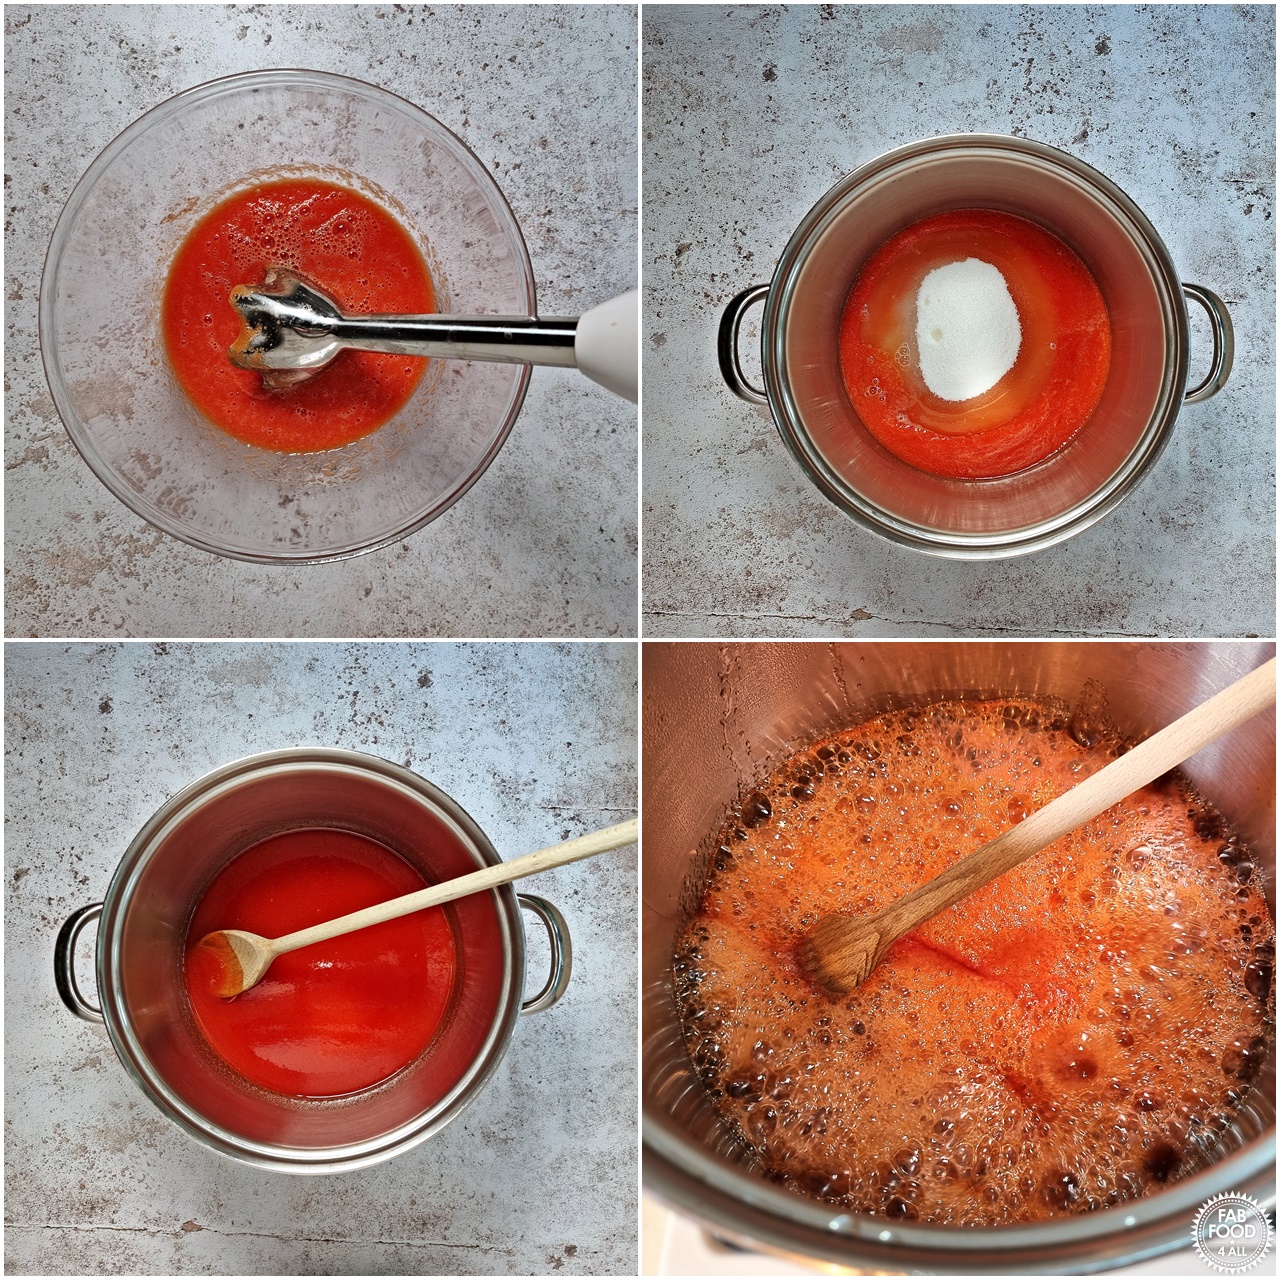 How to make Watermelon Jam shots 7 - 10